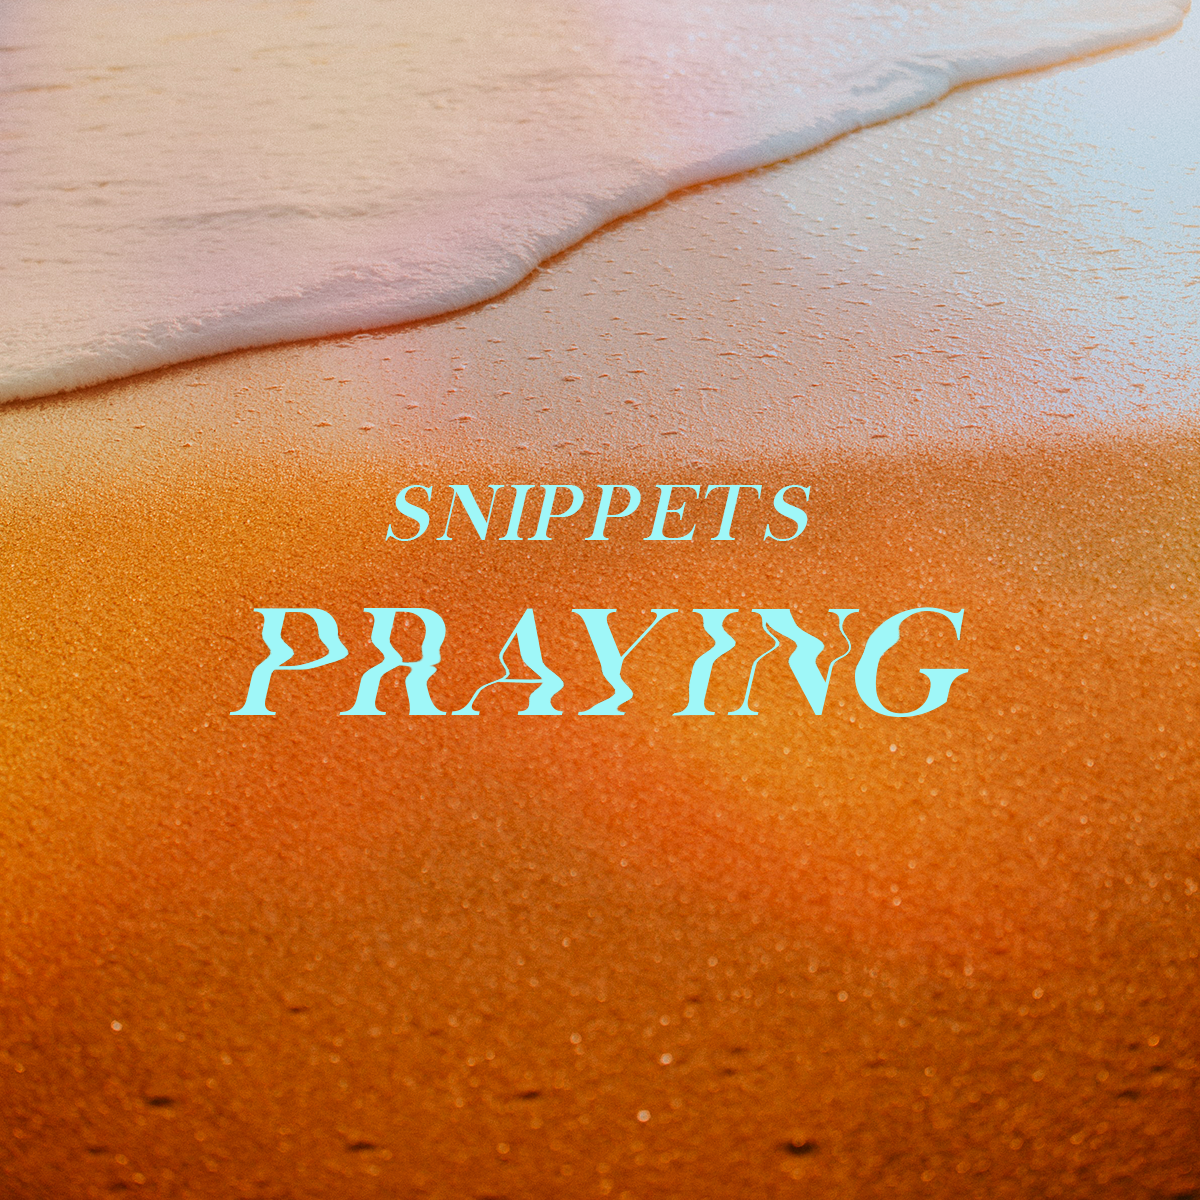 Snippets: Praying